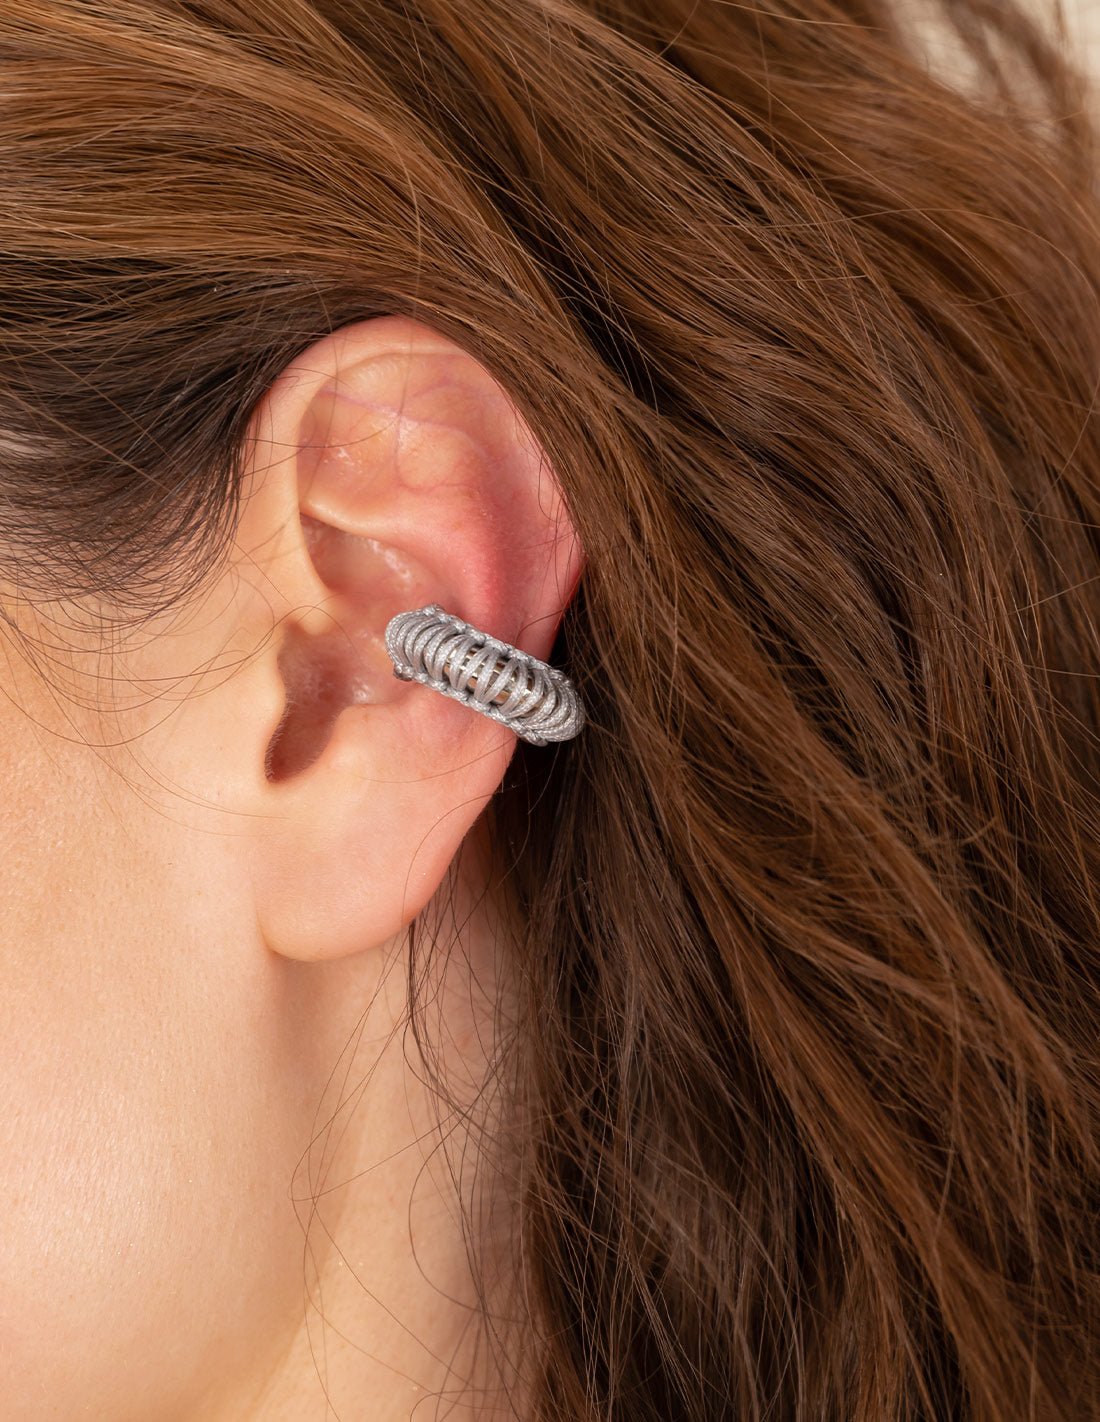 Luna Llena Ear Cuff Silver - Ear Cuff - Entreaguas Wearable Art